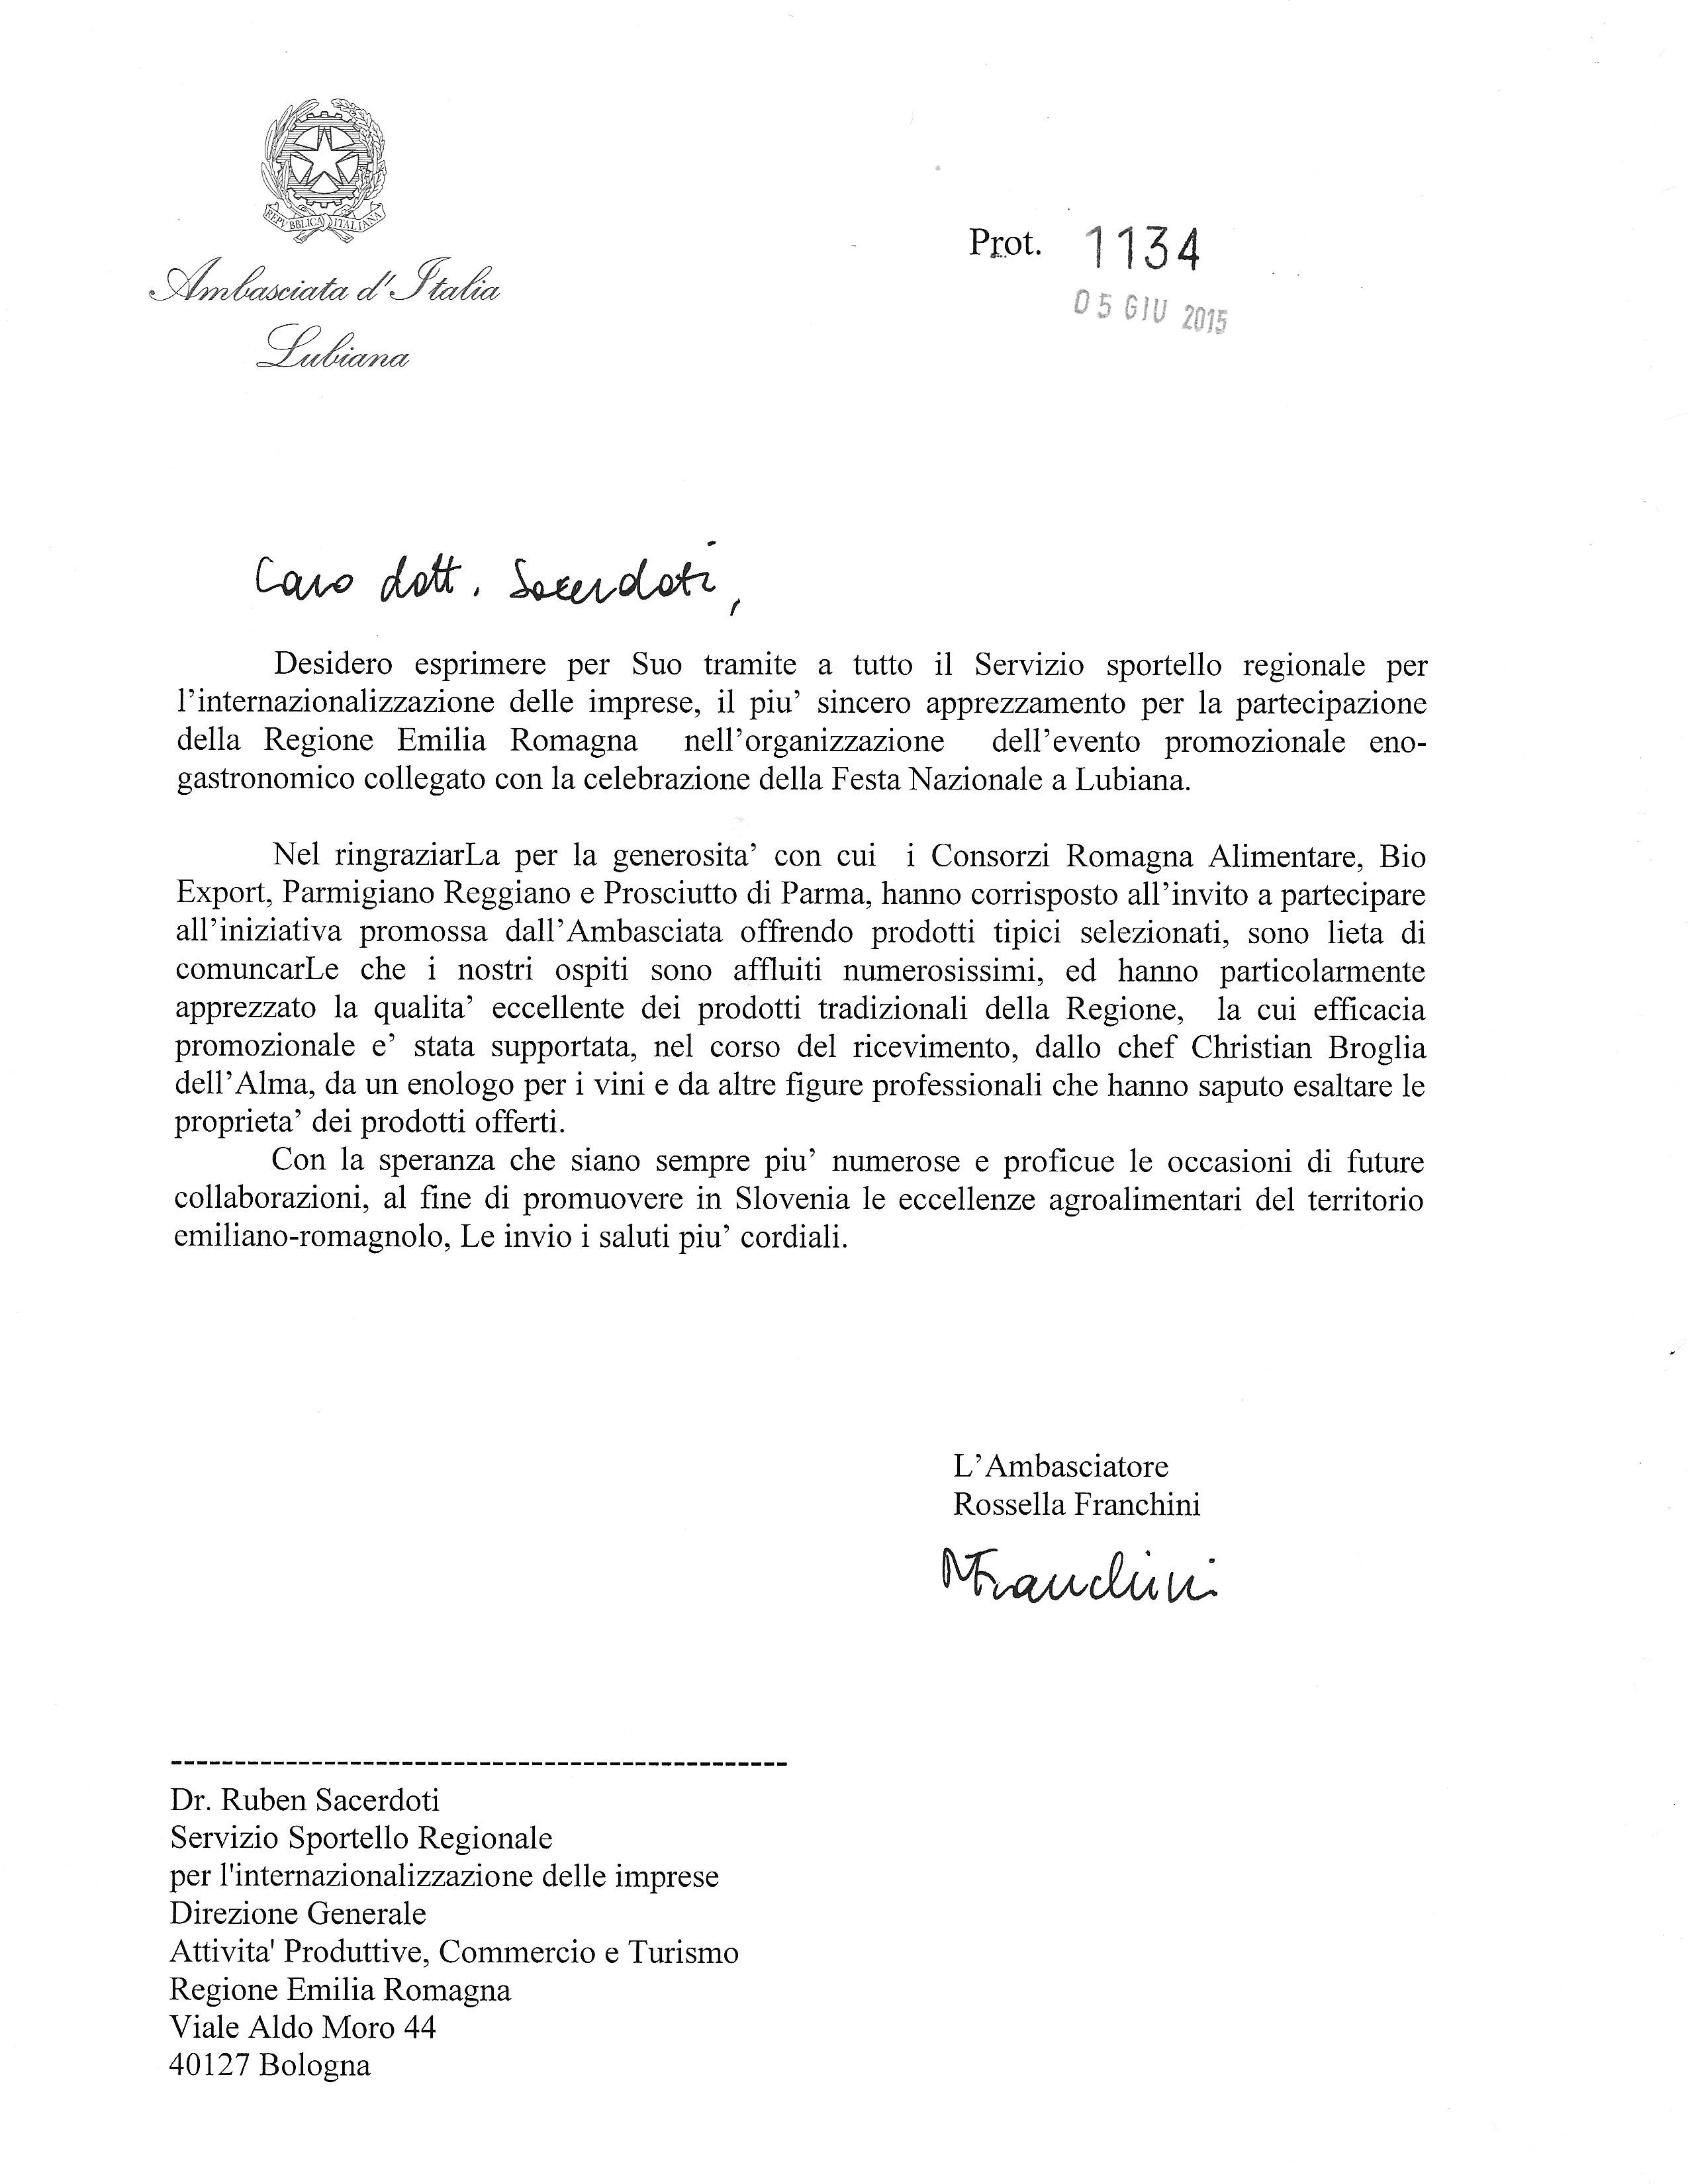 lettera ambasciata ditalia in slovenia